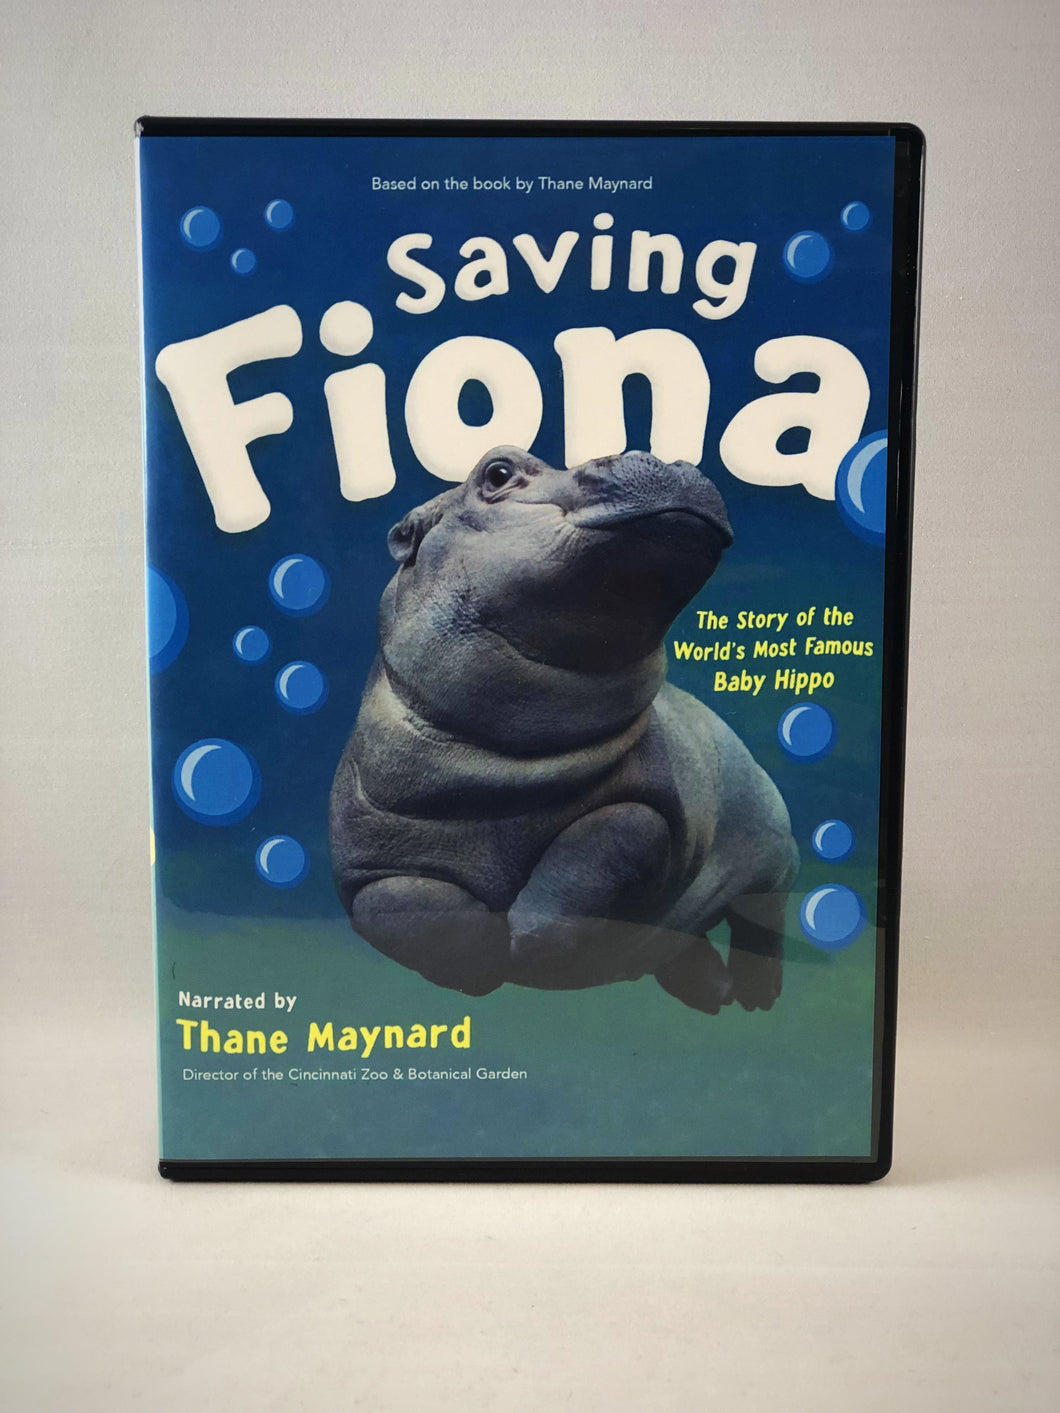 saving fiona